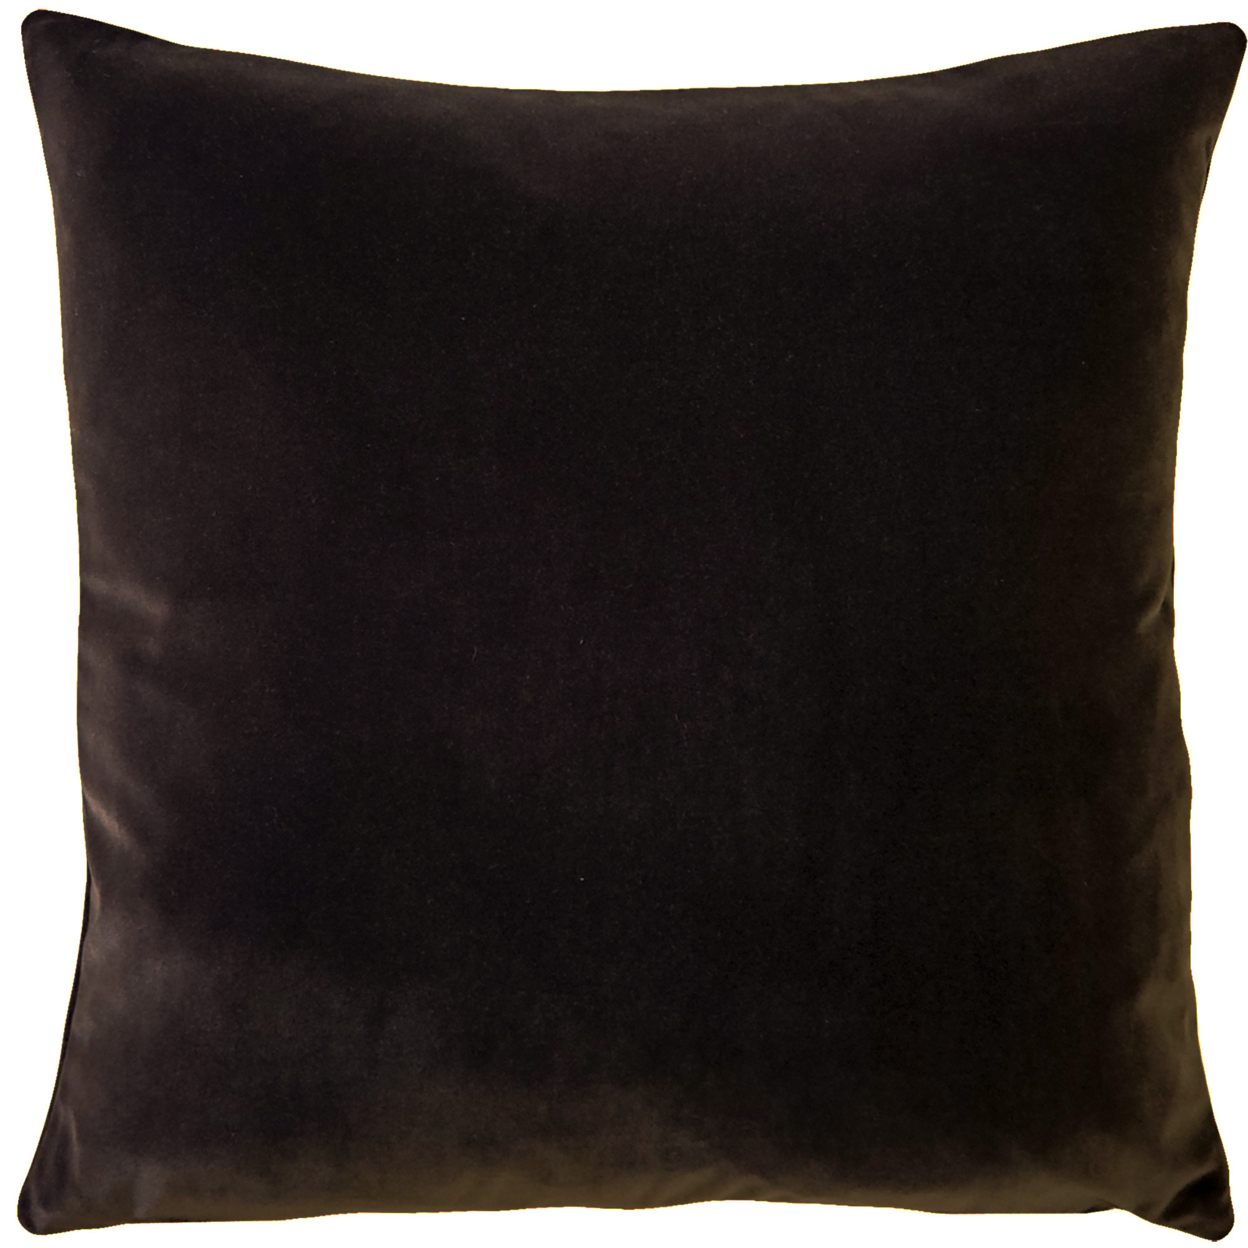 Castello Velvet Throw Pillows, Complete Pillow With Polyfill Pillow Insert (18 Colors, 3 Sizes) - Burgundy, 12x20